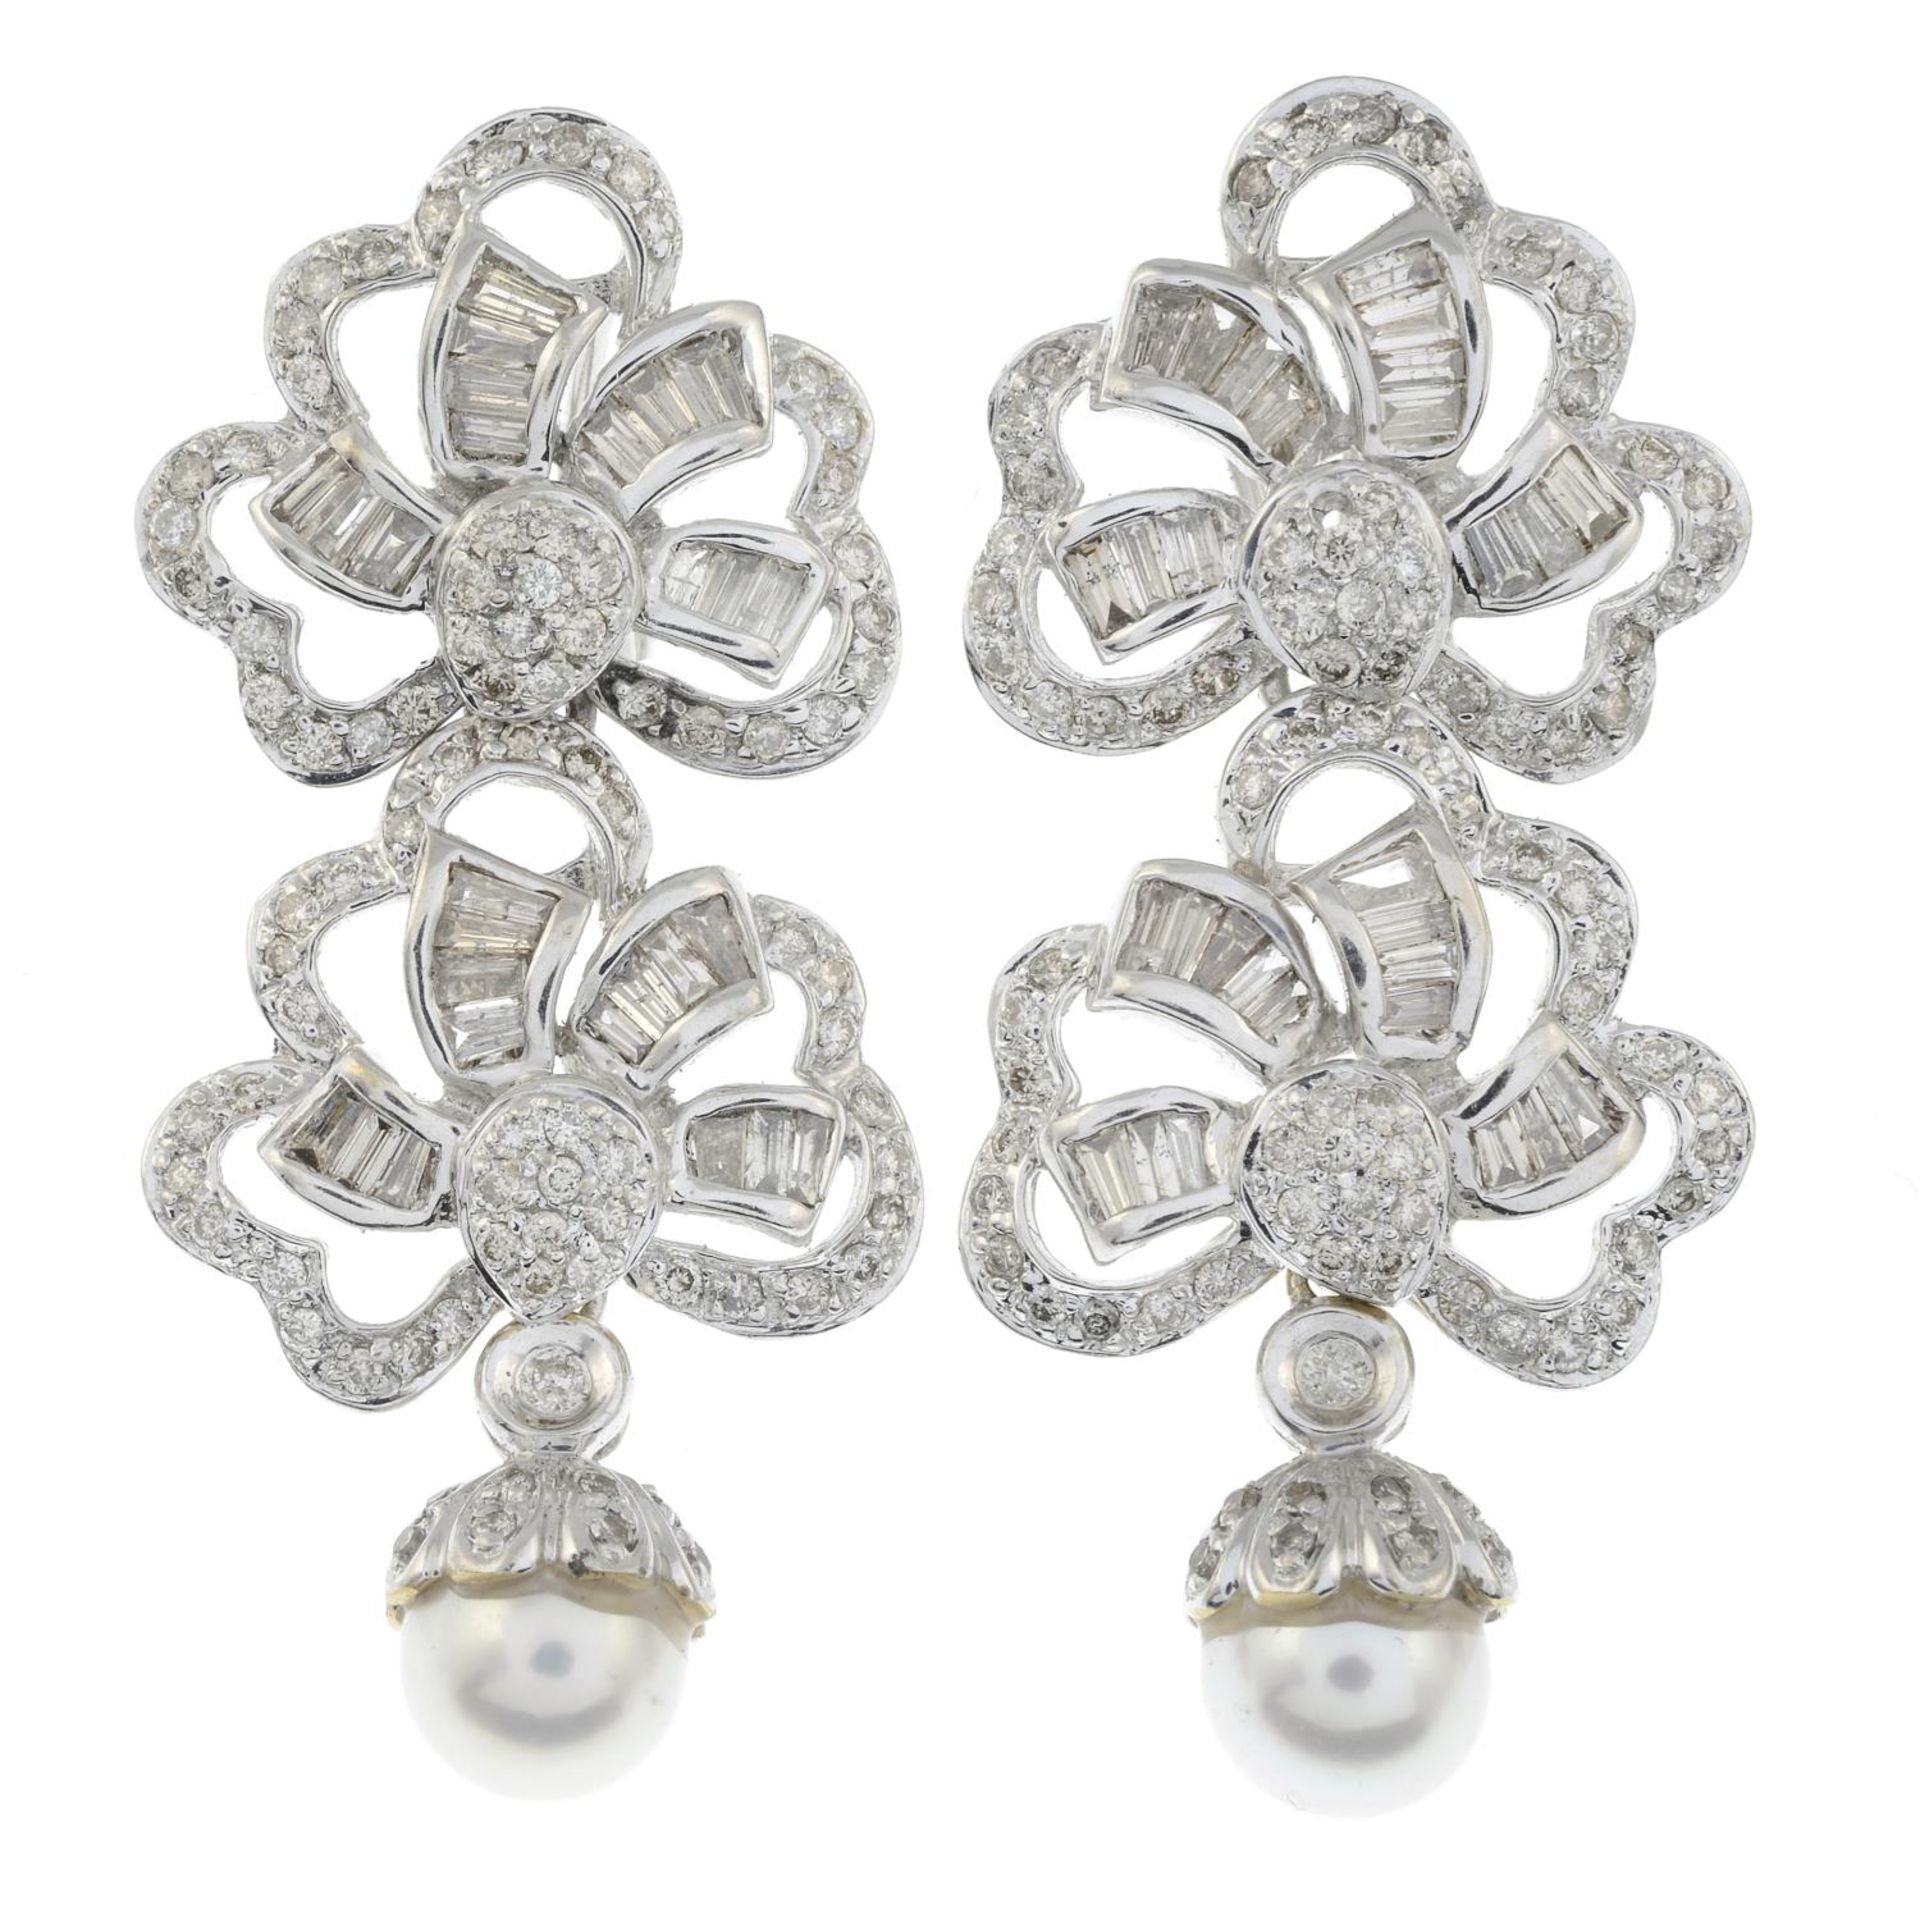 A pair of vari-cut diamond earrings, with cultured pearl drops.